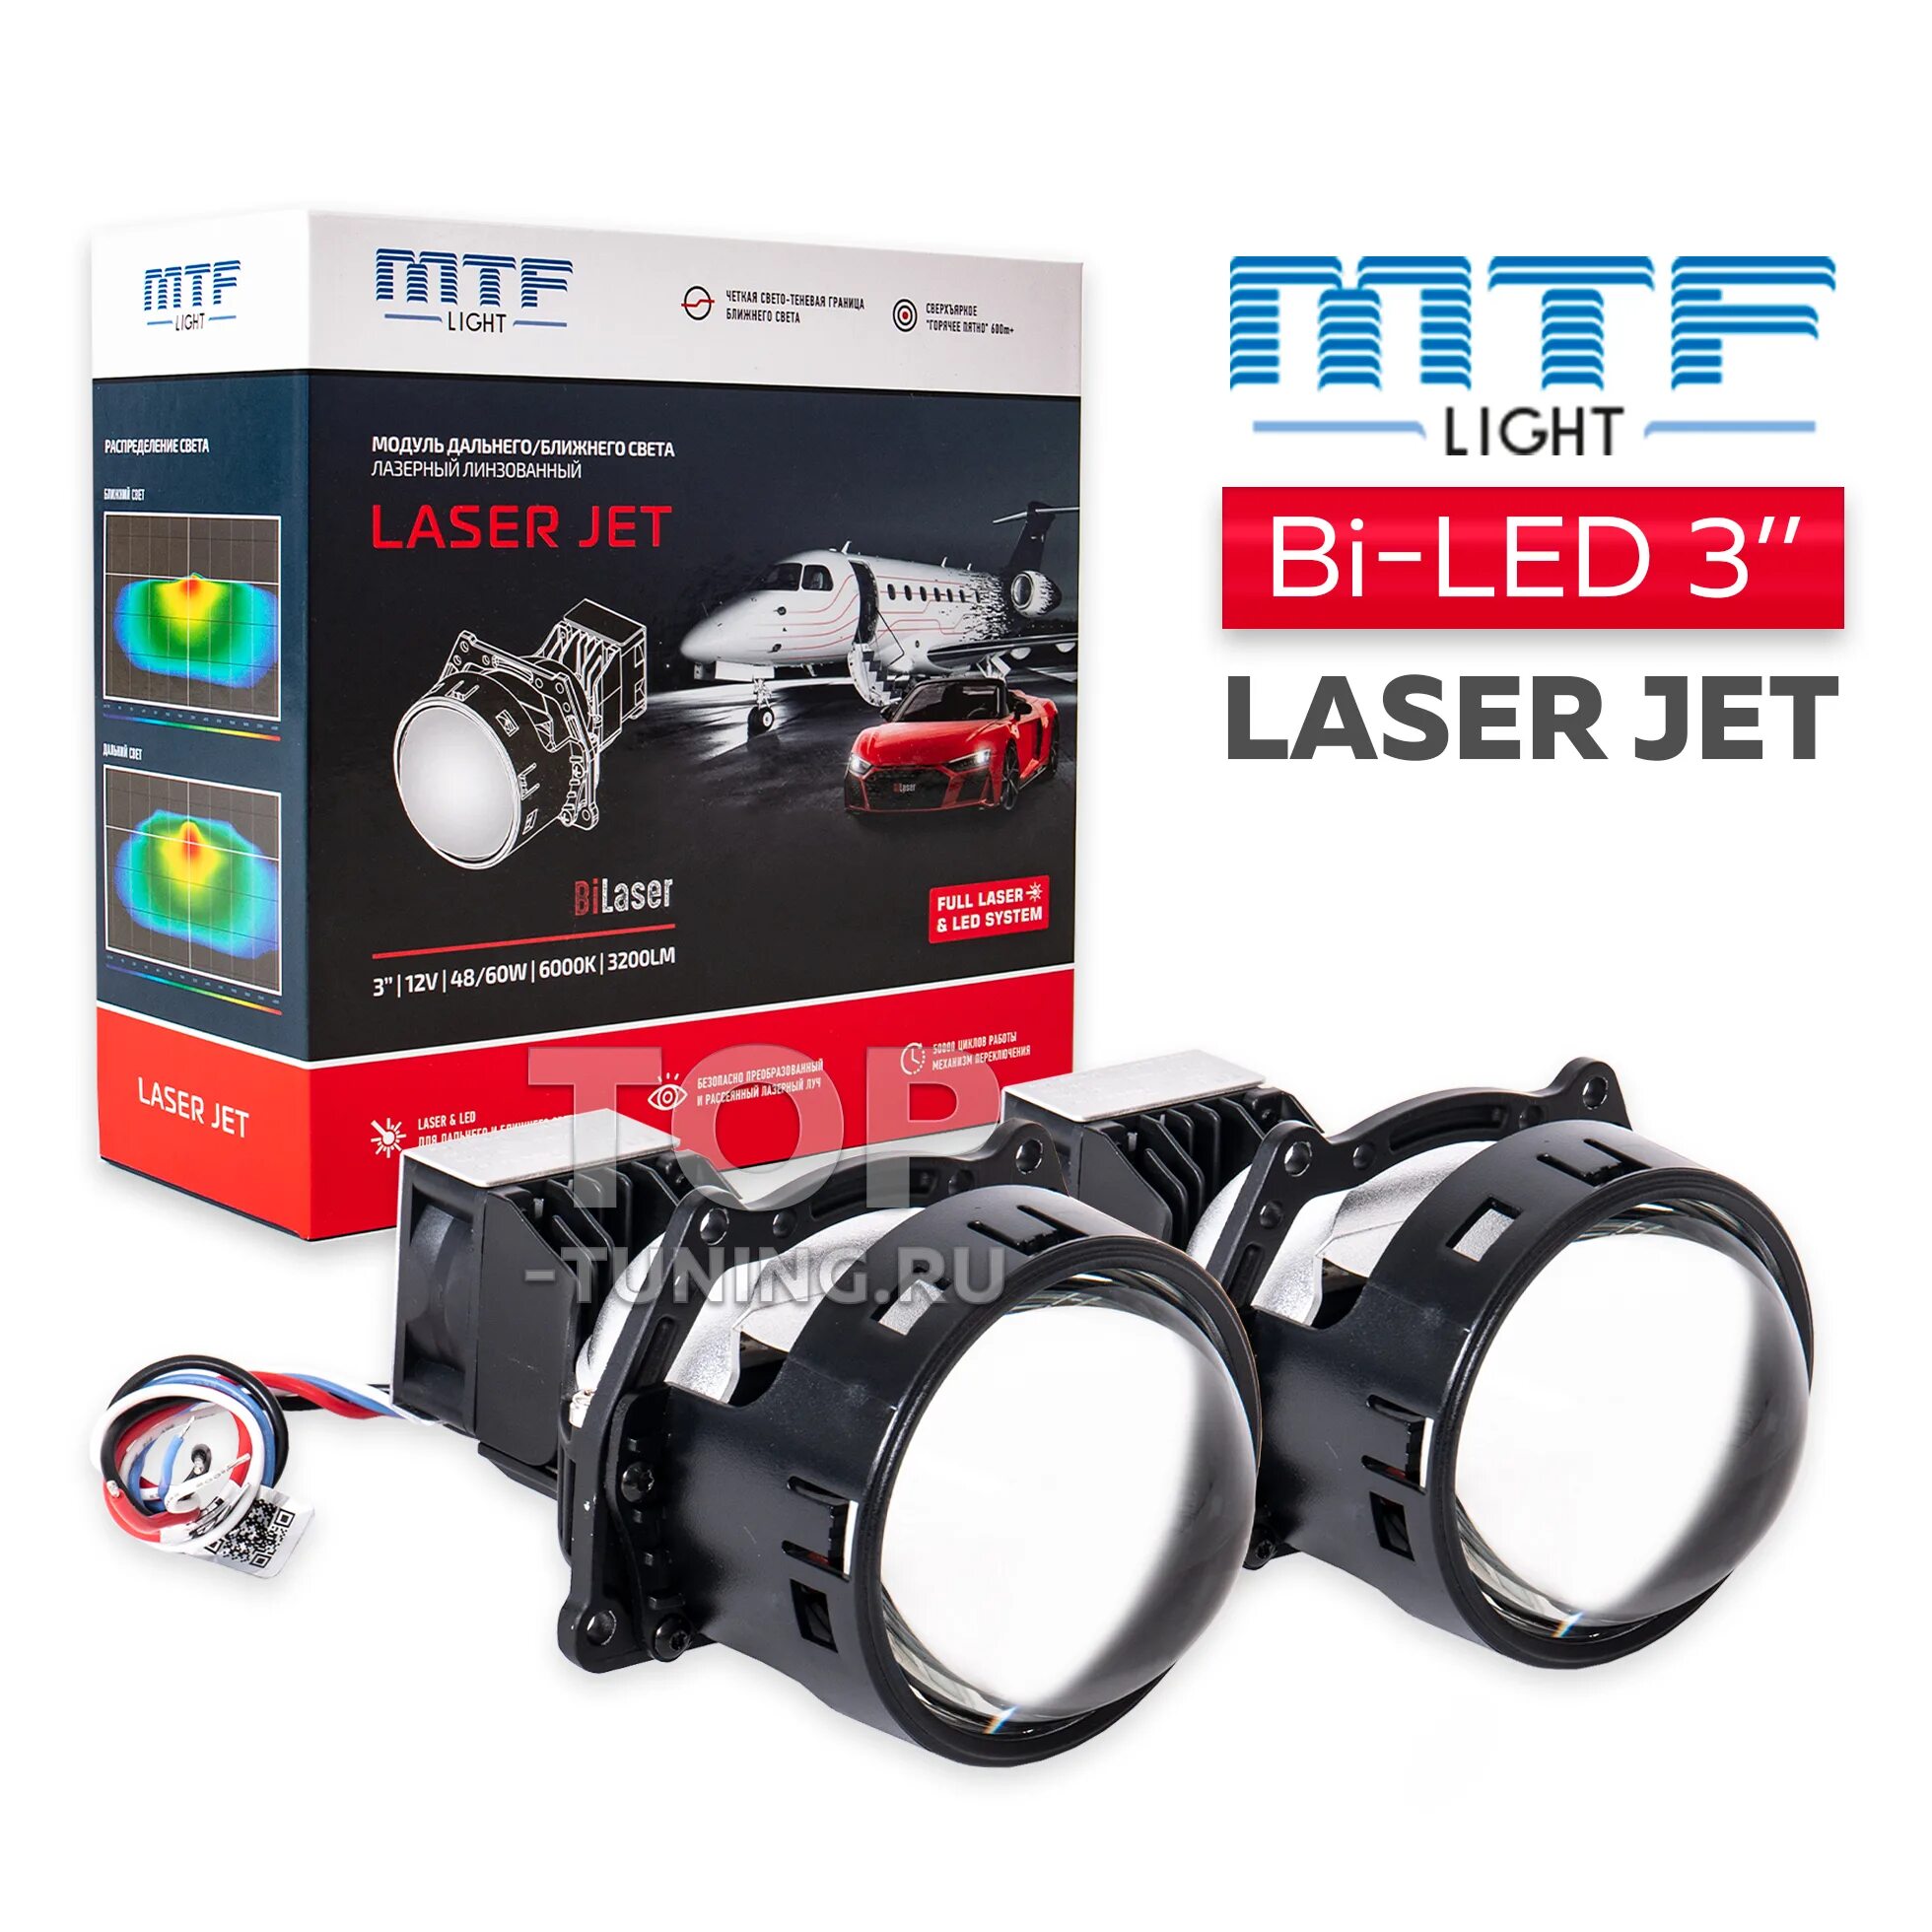 Лазерные би лед. Clearlight 3.0 bi-led. MTF Light Laser Jet bi-led 3.0 6000k линзы. Линзы МТФ би лед.